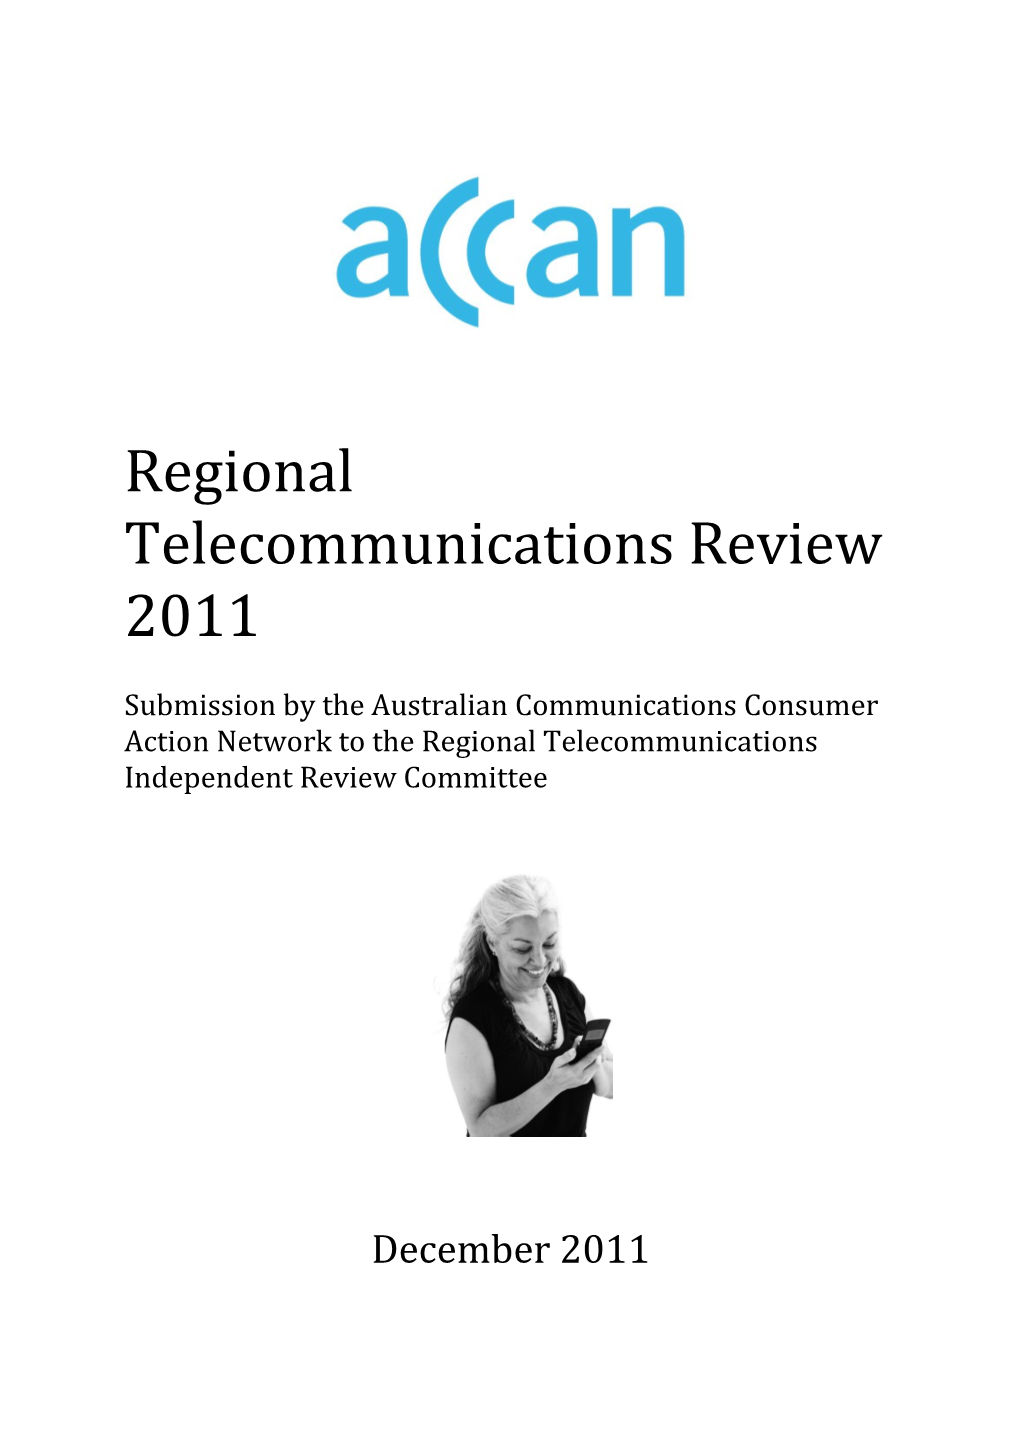 Regional Telecommunications Review 2011